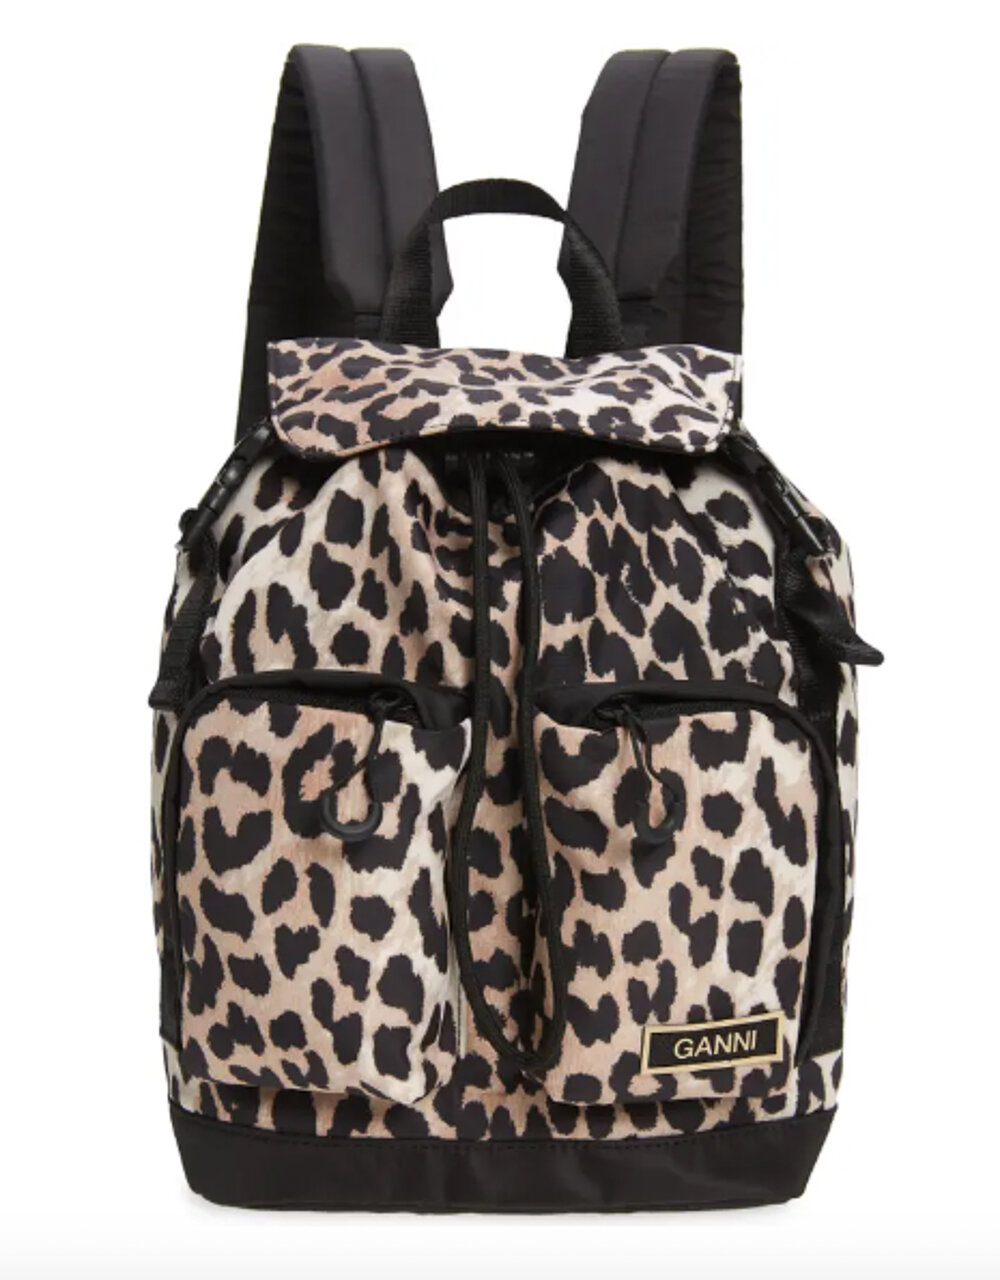 (2) Ganni Small Leopard Print Backpack